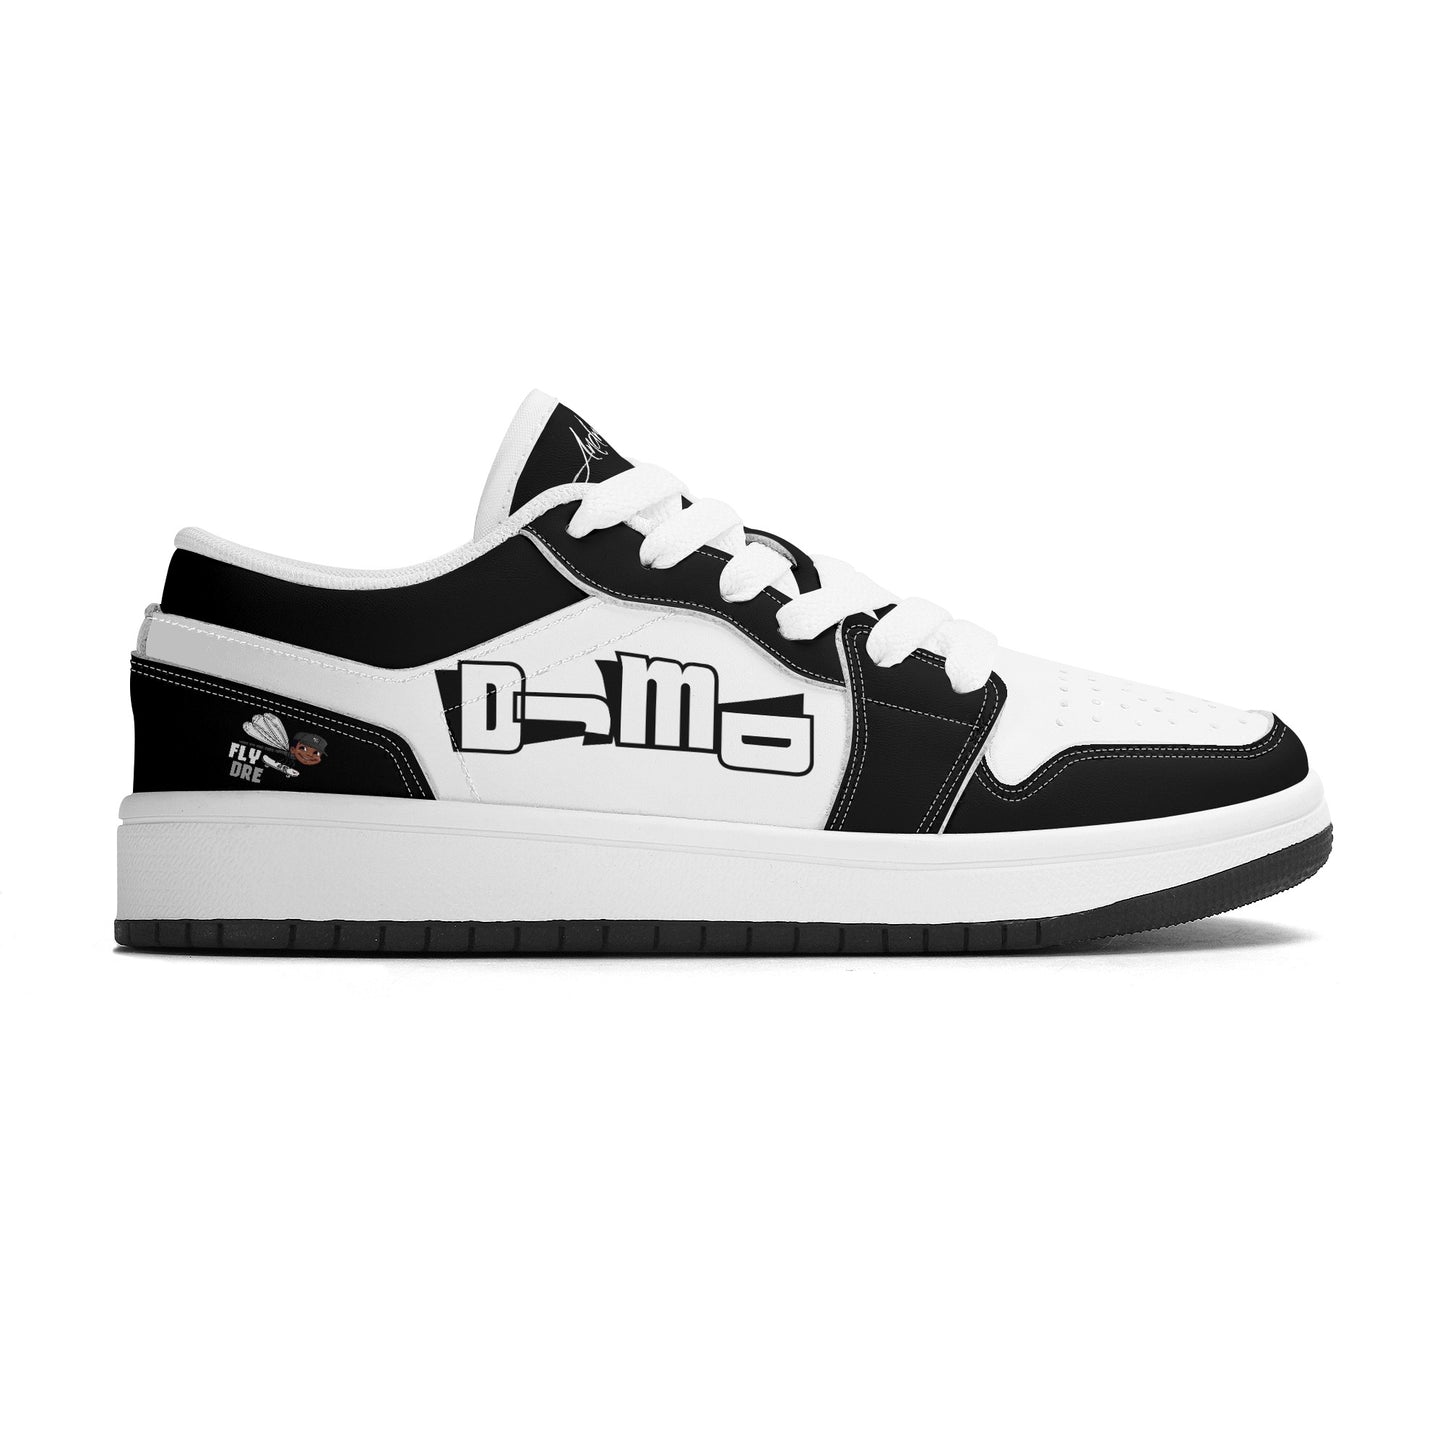 DJMD Children Premium Low Top Leather Sneakers